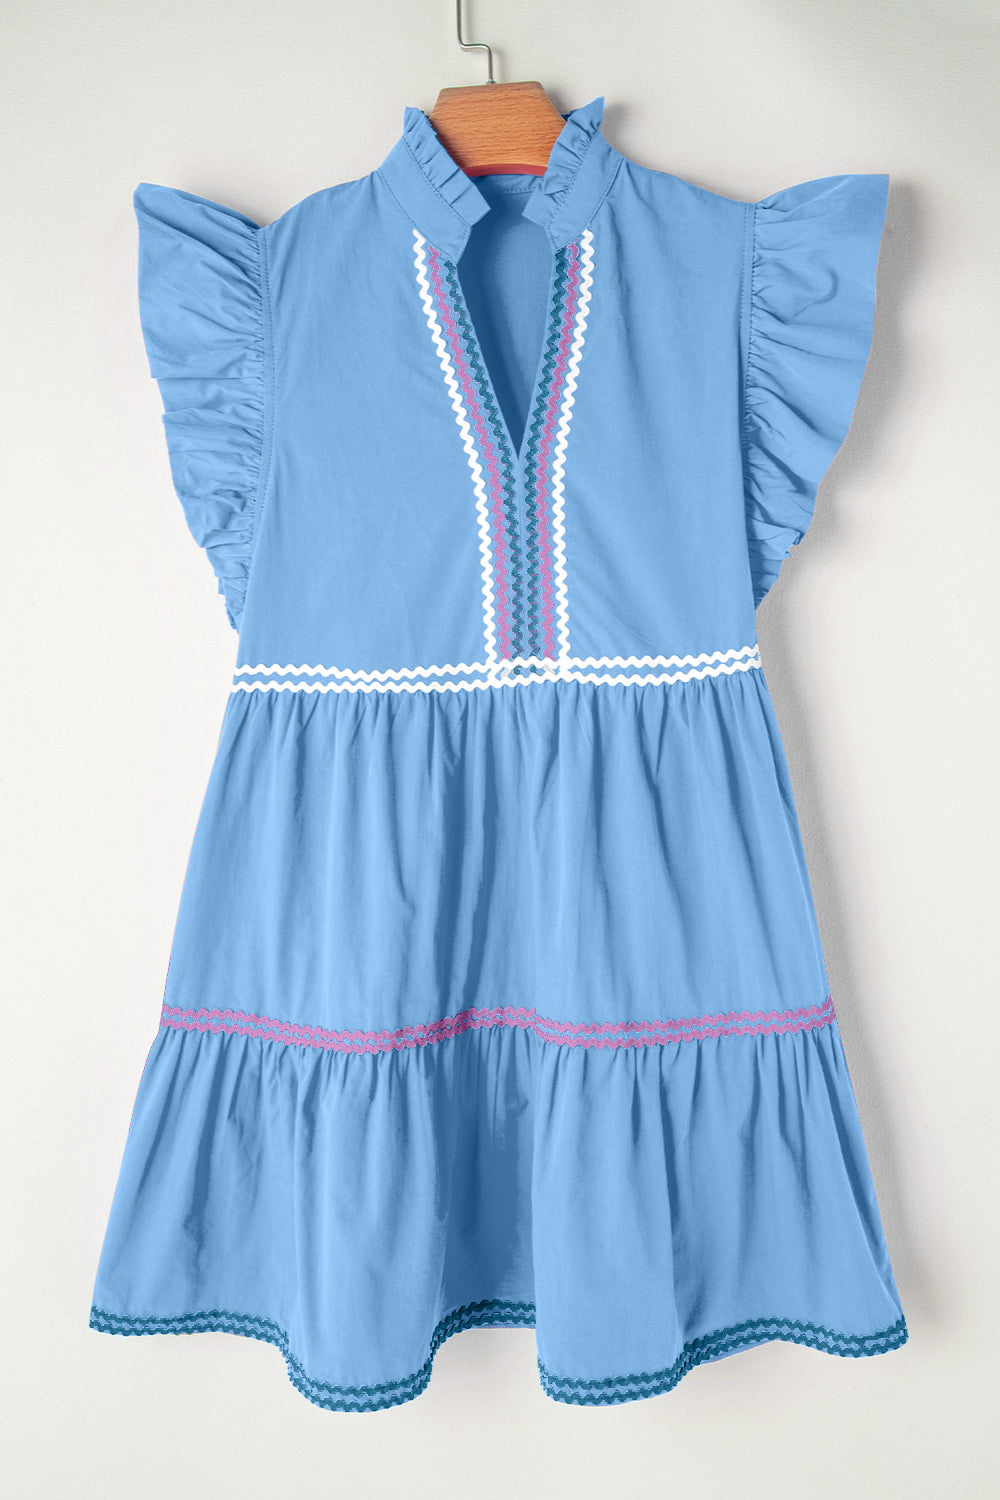 Ruffled Notched Cap Sleeve Mini Dress Sunset and Swim Light Blue S 